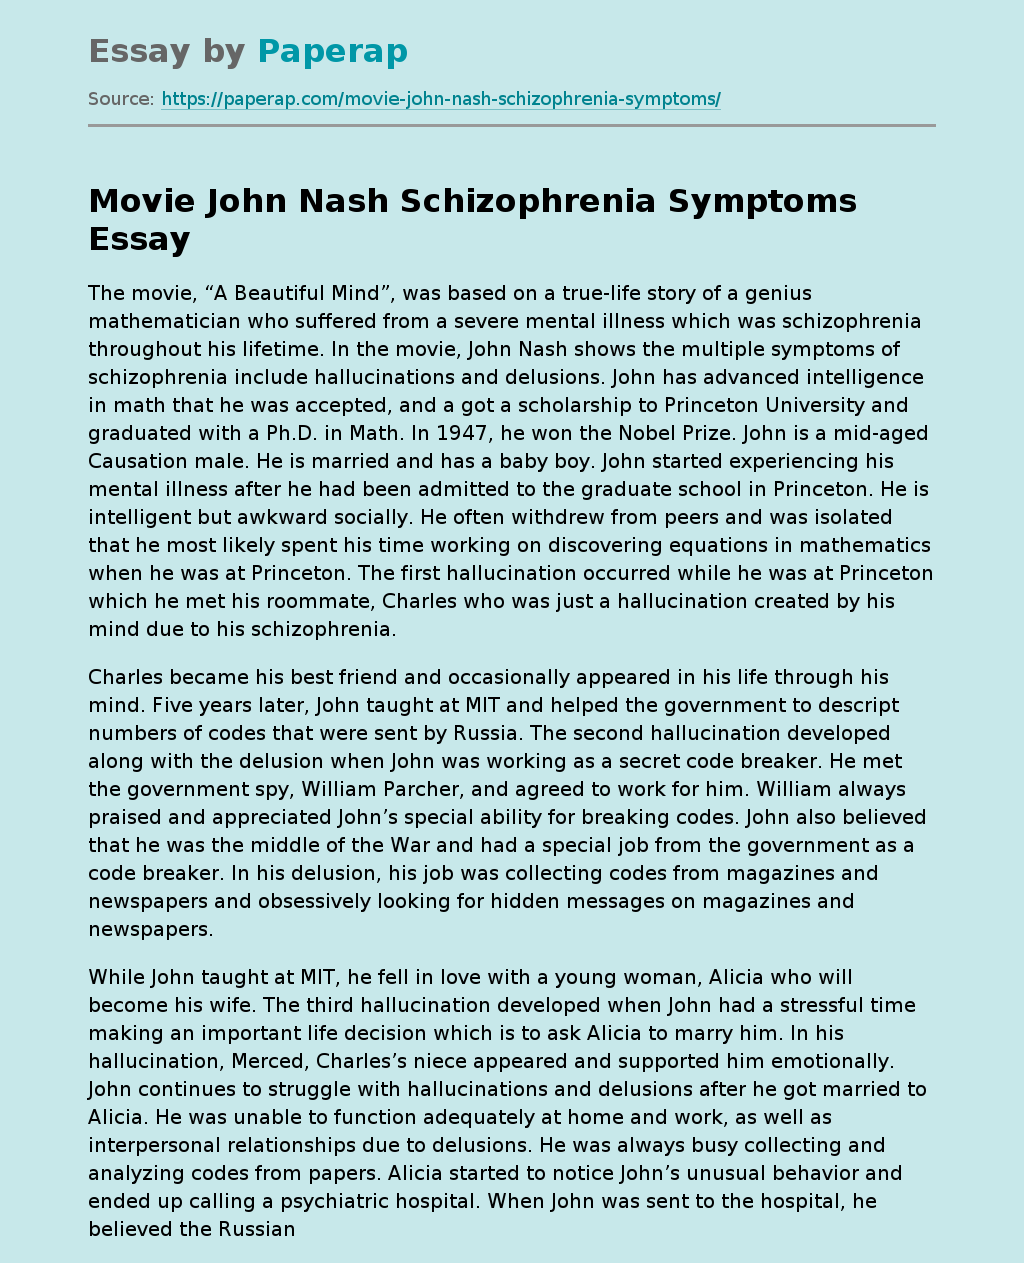 Movie John Nash Schizophrenia Symptoms